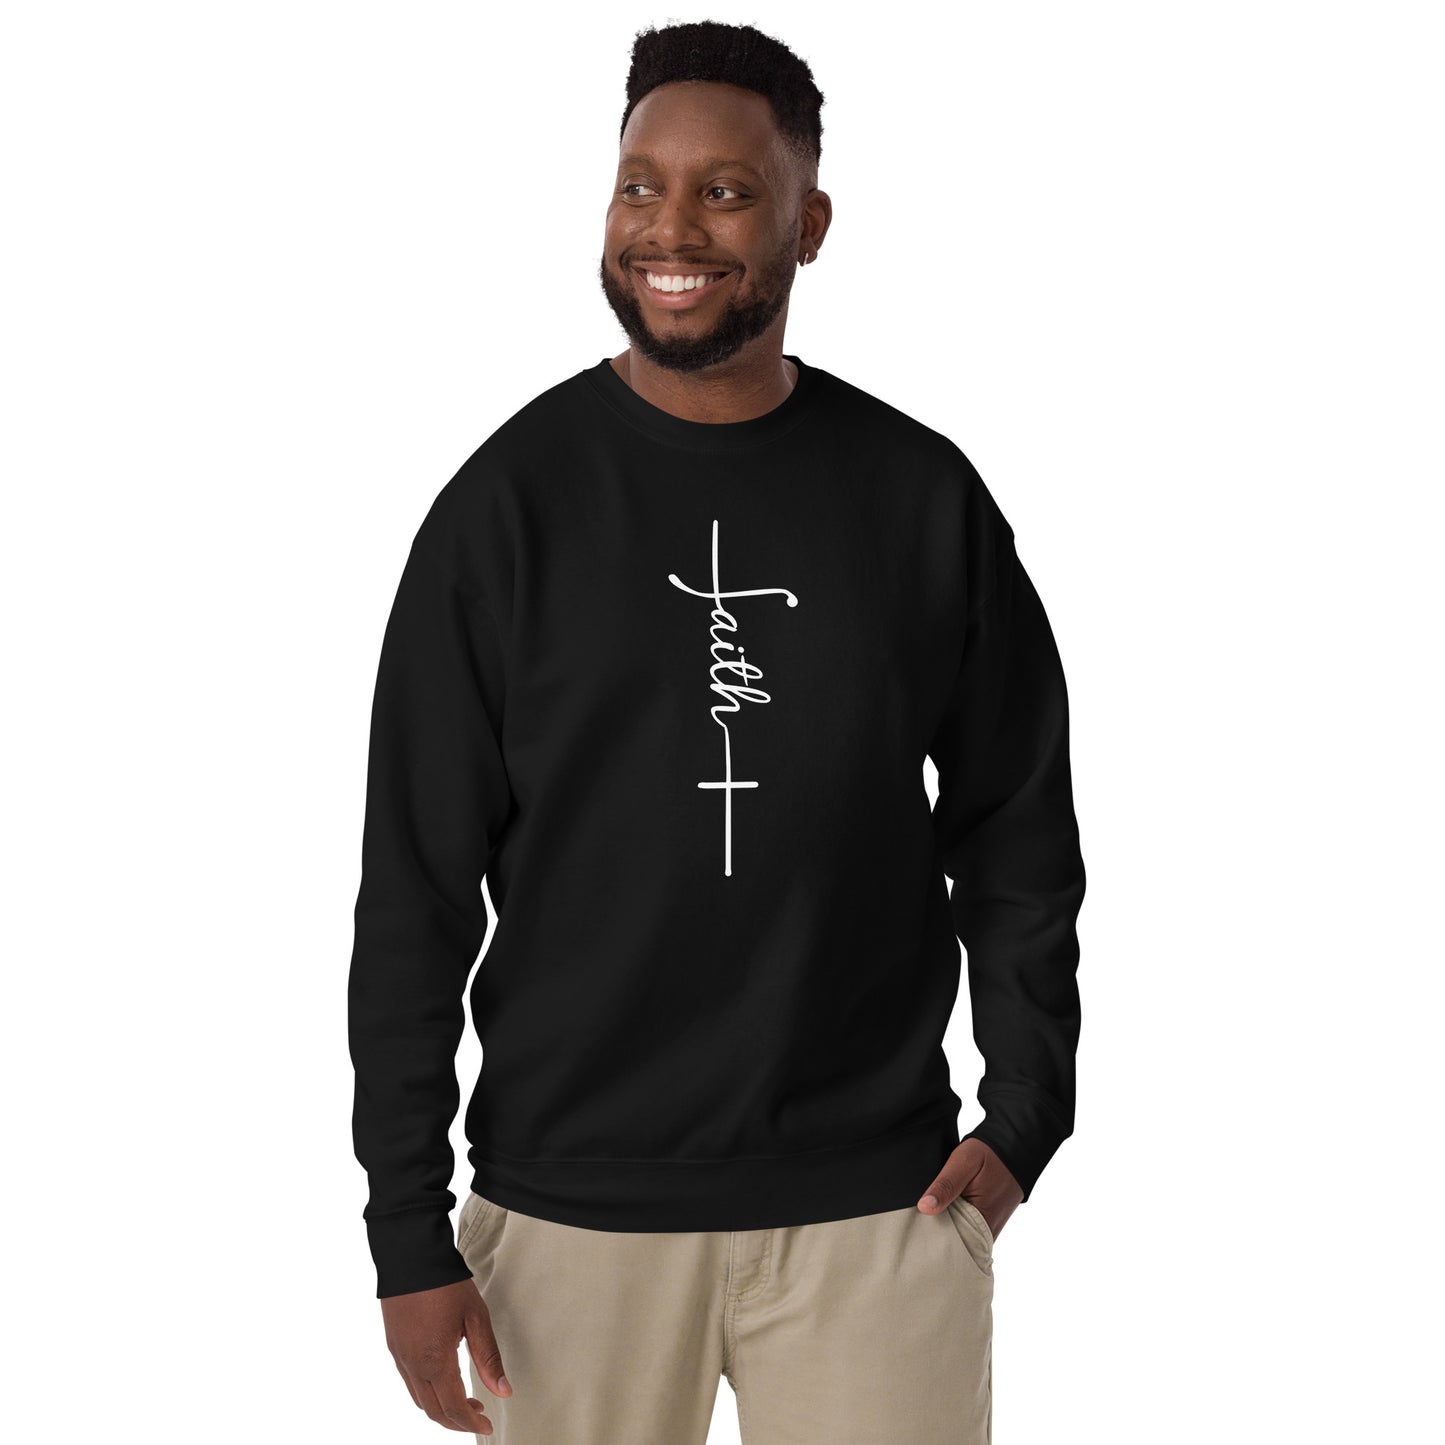 Cursive Faith with Cross Sweatshirt